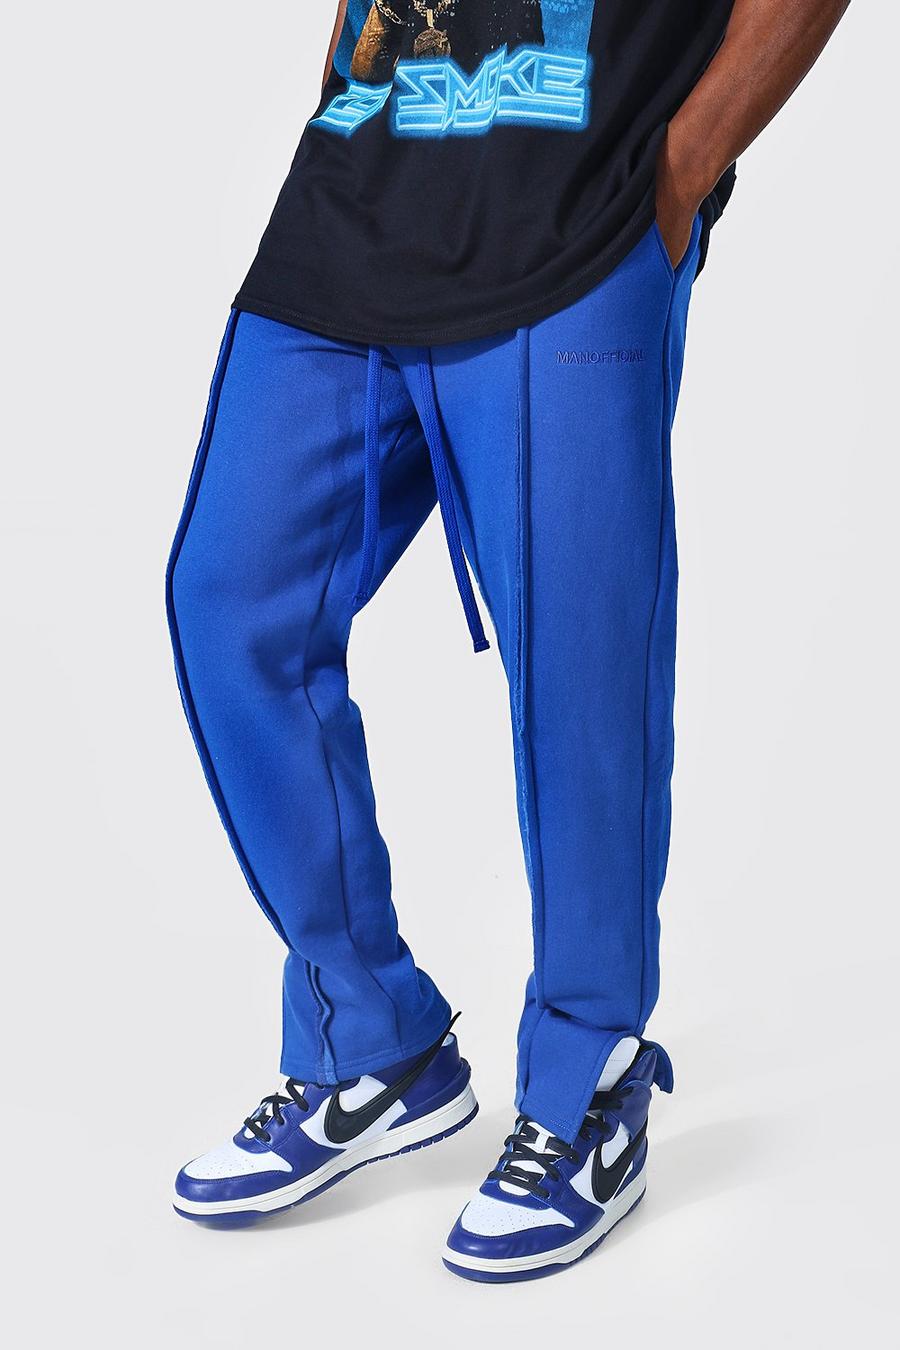 Pantaloni tuta comodi Man Official con spacco sul fondo, Cobalt azul image number 1